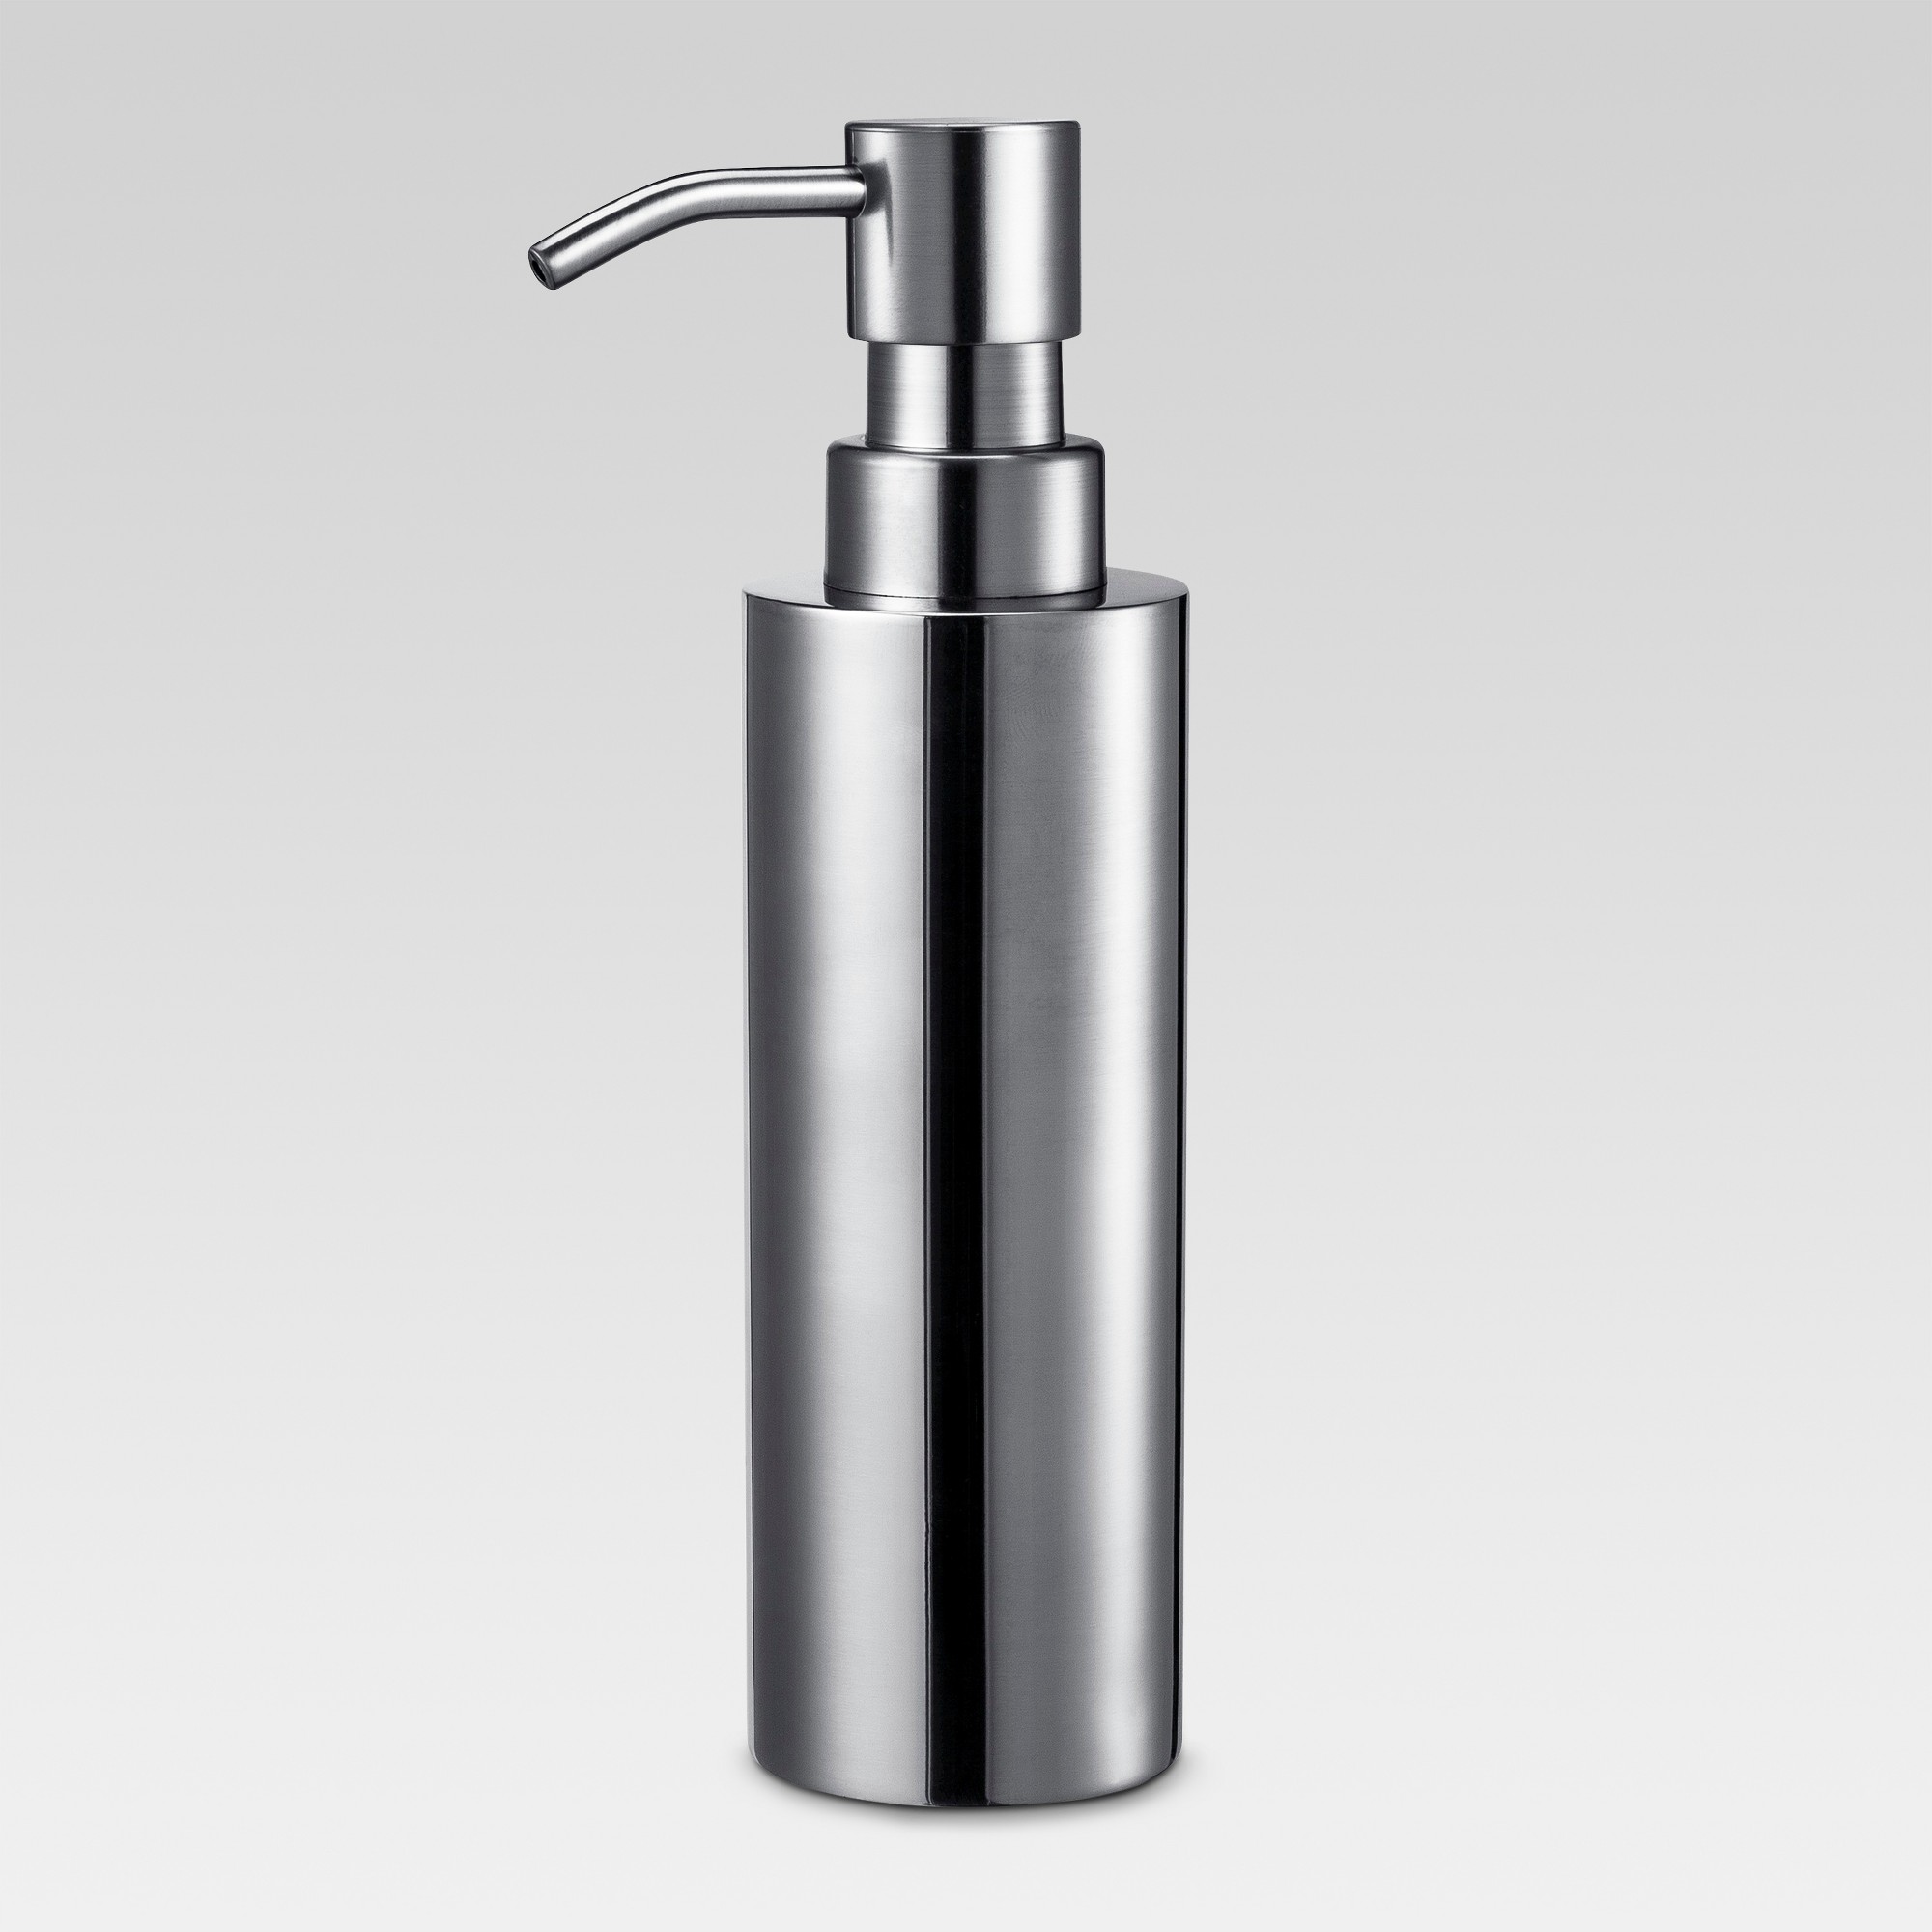 Brushed Stainless Steel Soap Dispenser - Threshold , Silver